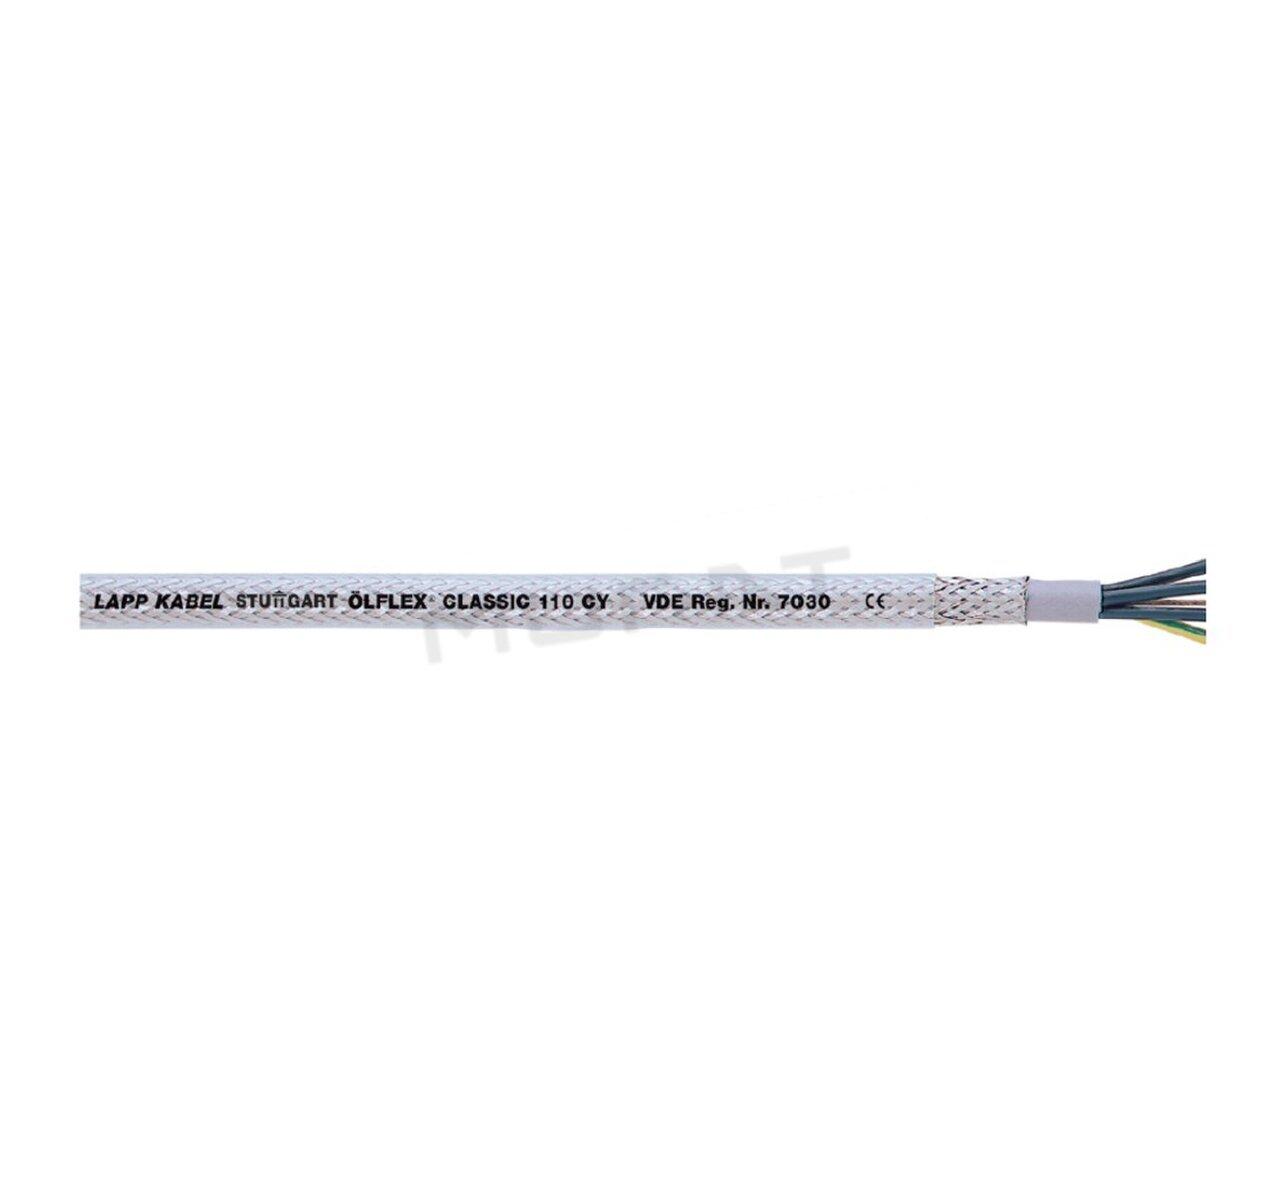 Kábel OLFLEX CLASSIC 110 CY 3X1,5 mm2